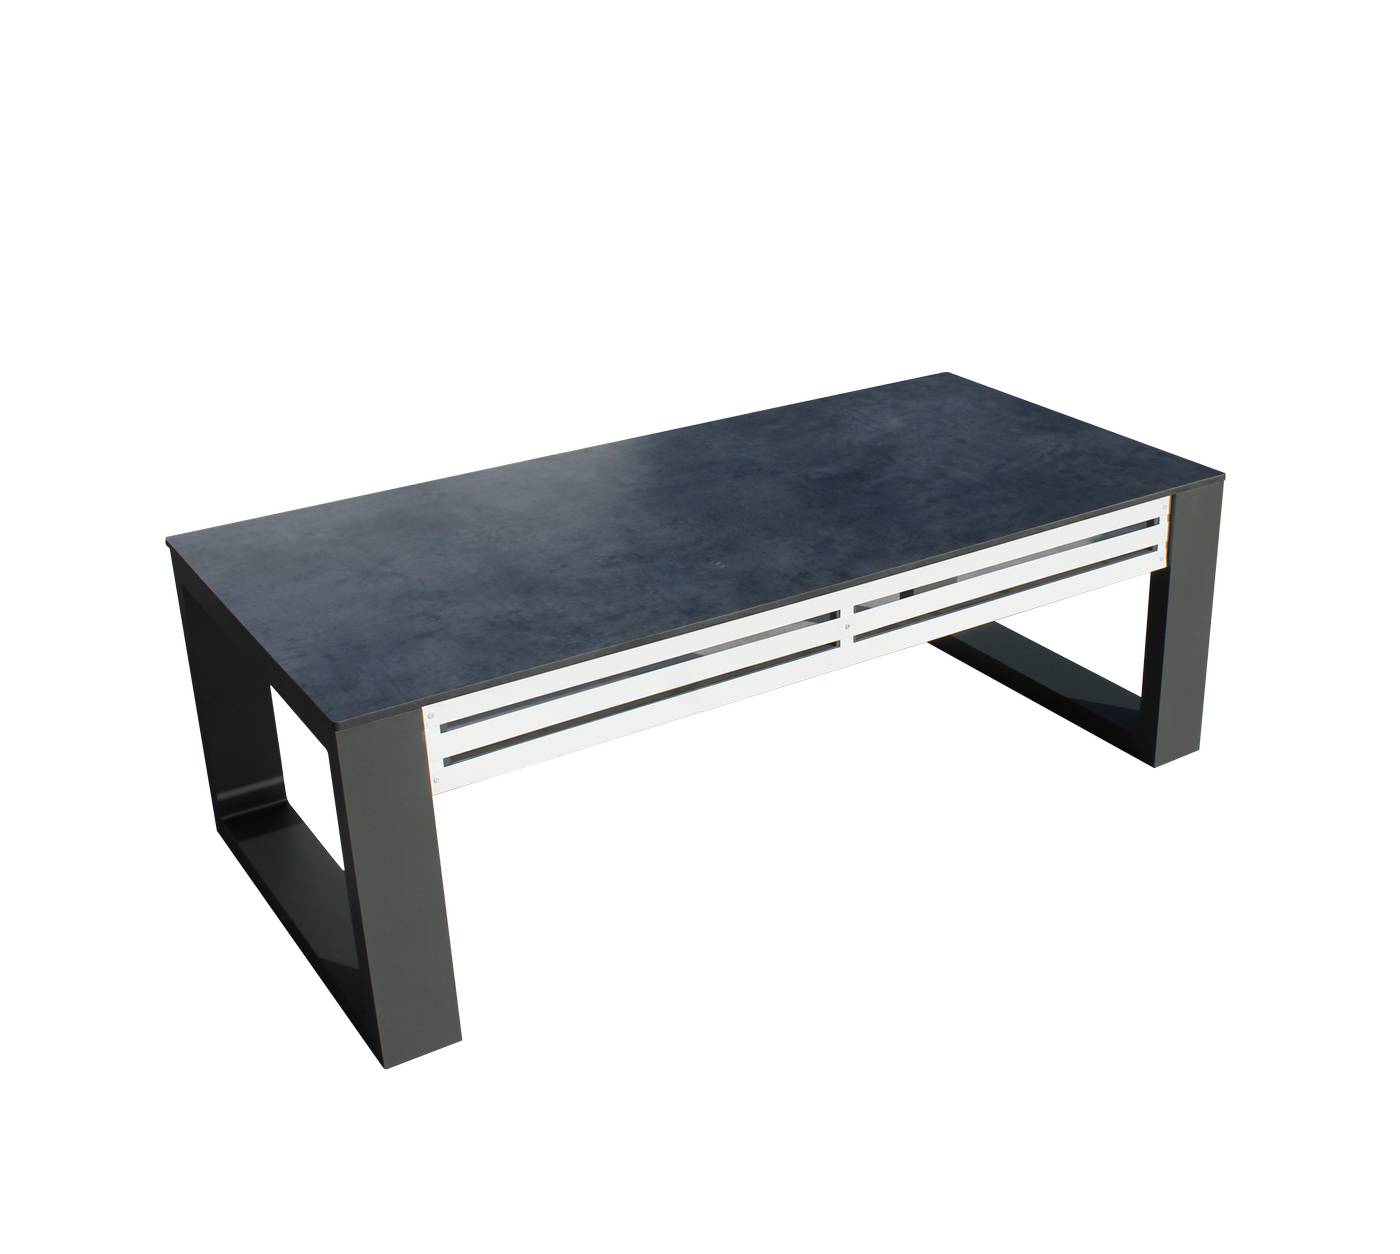 Set Aluminio Luxe Gala-9 - Exclusivo conjunto de alumnio bicolor: 1 sofá de 2 plazas + 2 sillones + 2 reposapiés + 1 mesa de centro.